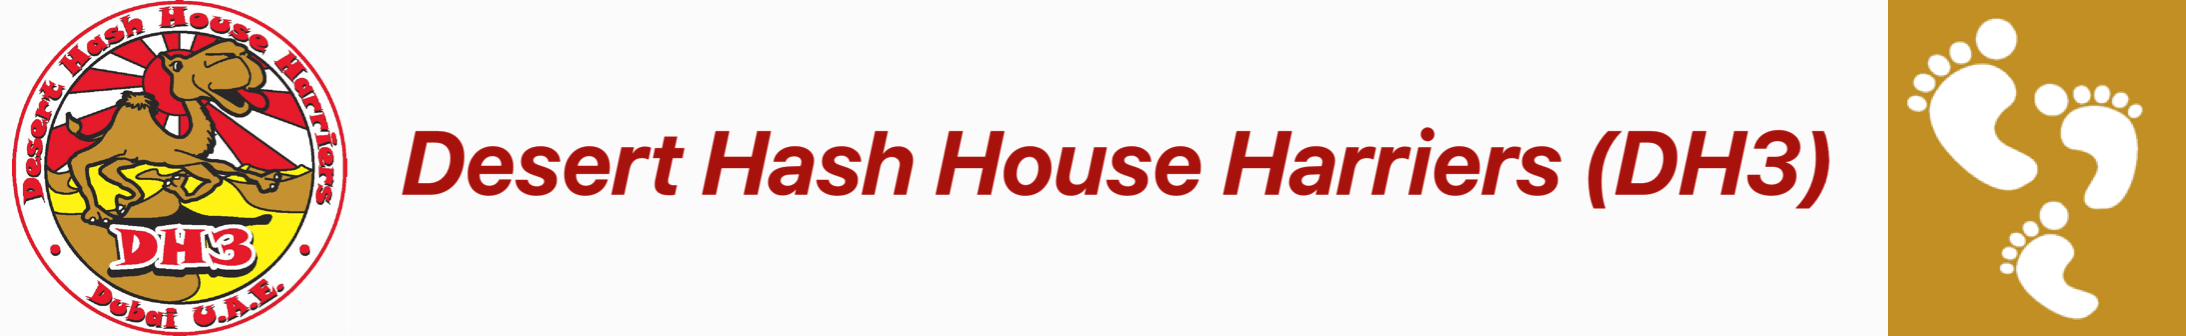 Desert Hash House Harriers (DH3) Logo